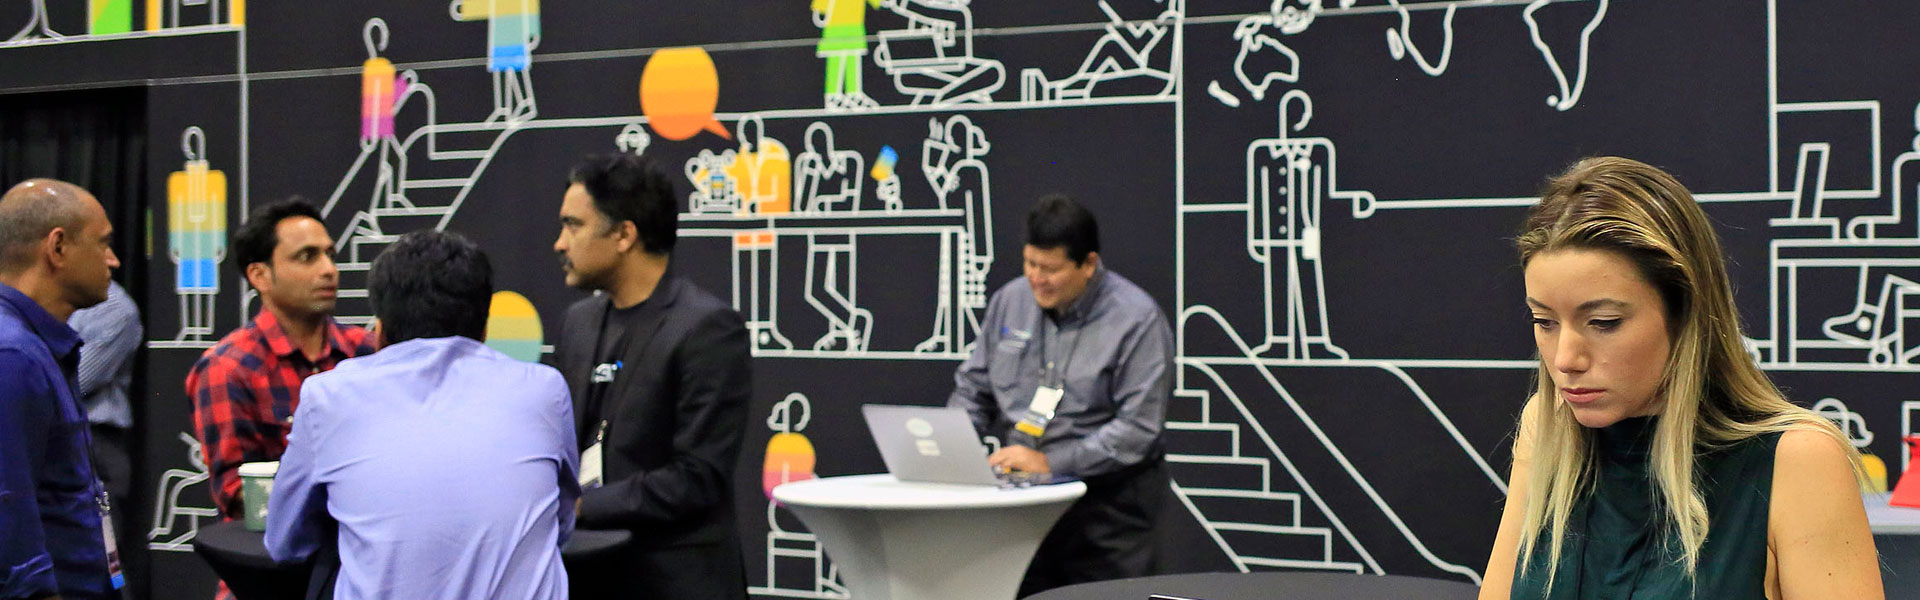 SAP TechEd show floor developers conceptualizing Skill Builder tool for SAP CoPilot